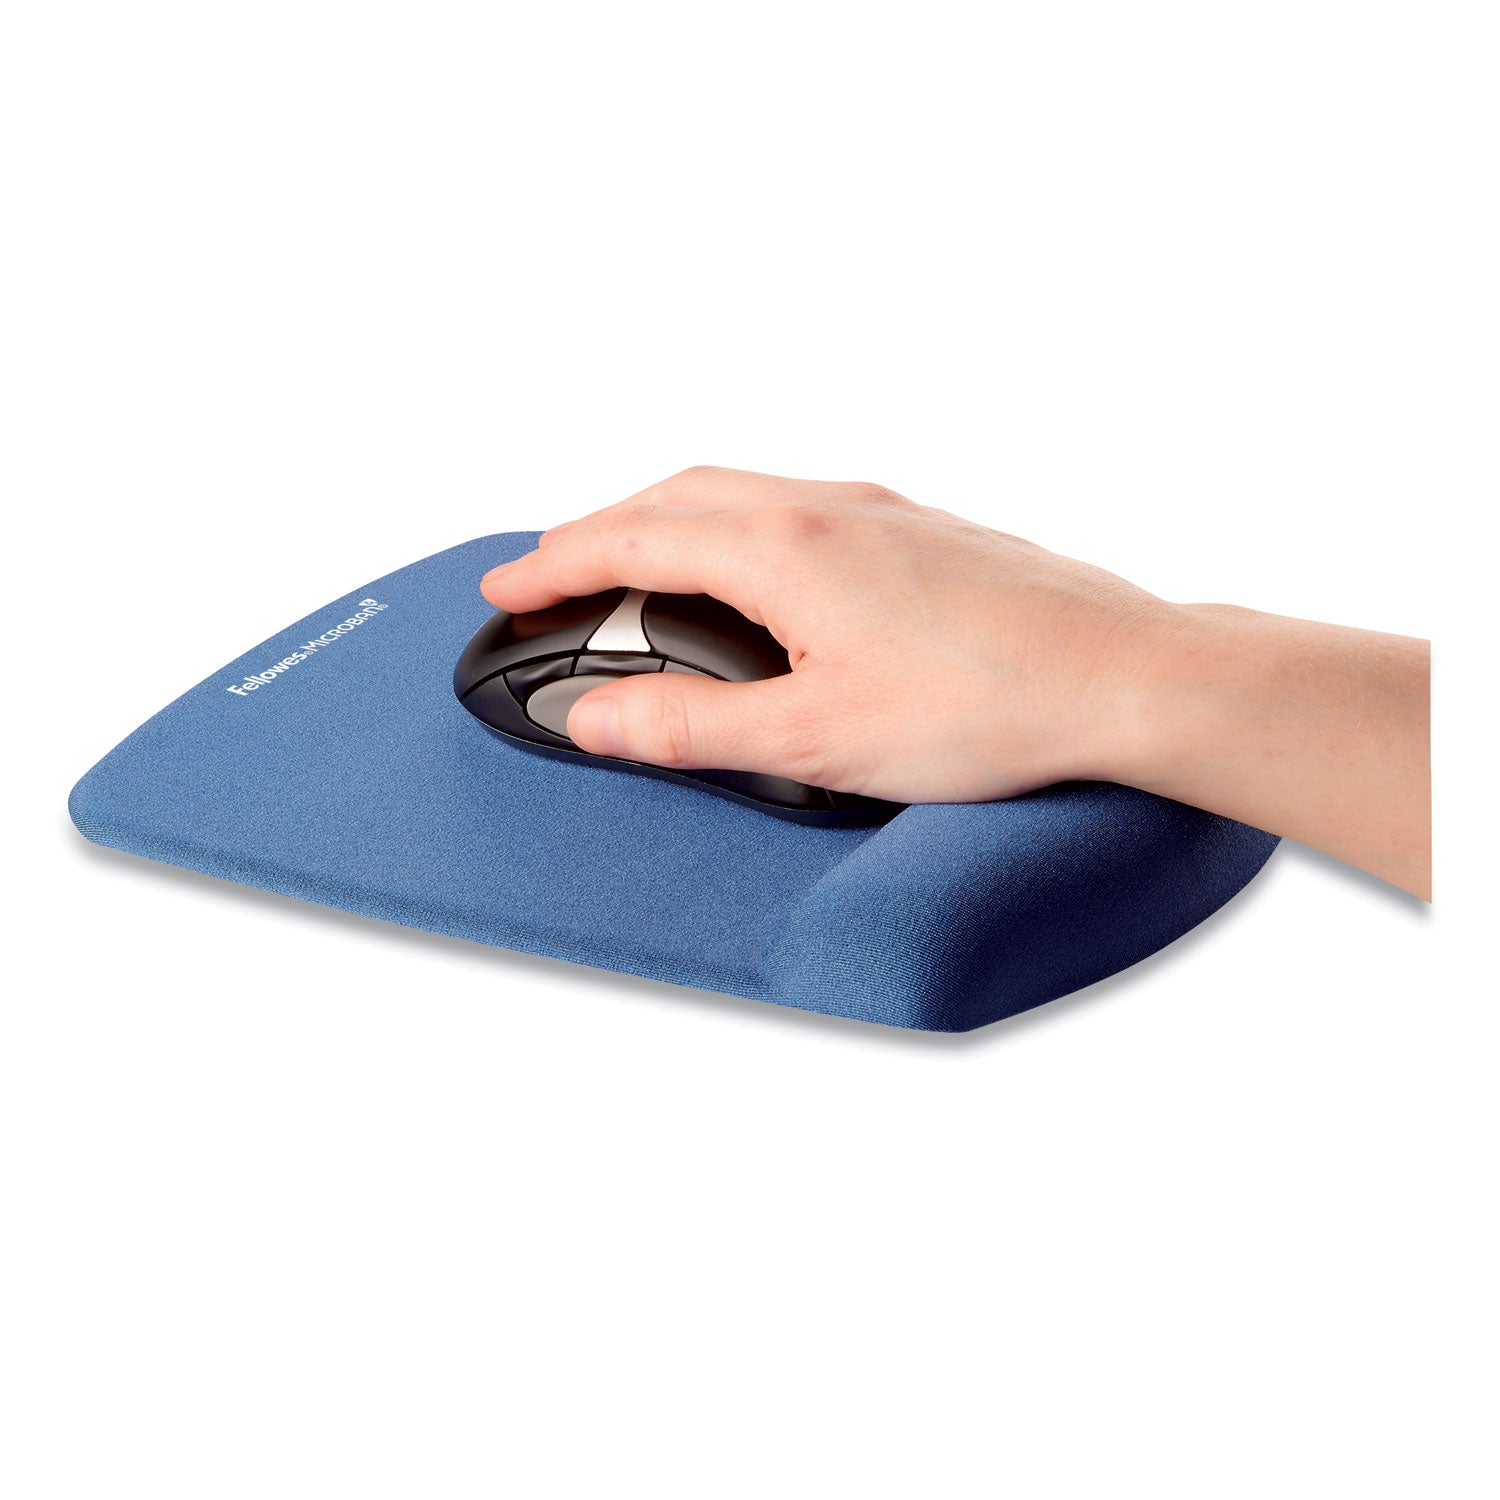 PlushTouch Mouse Pad with Wrist Rest, 7.25 x 9.37, Blue - 